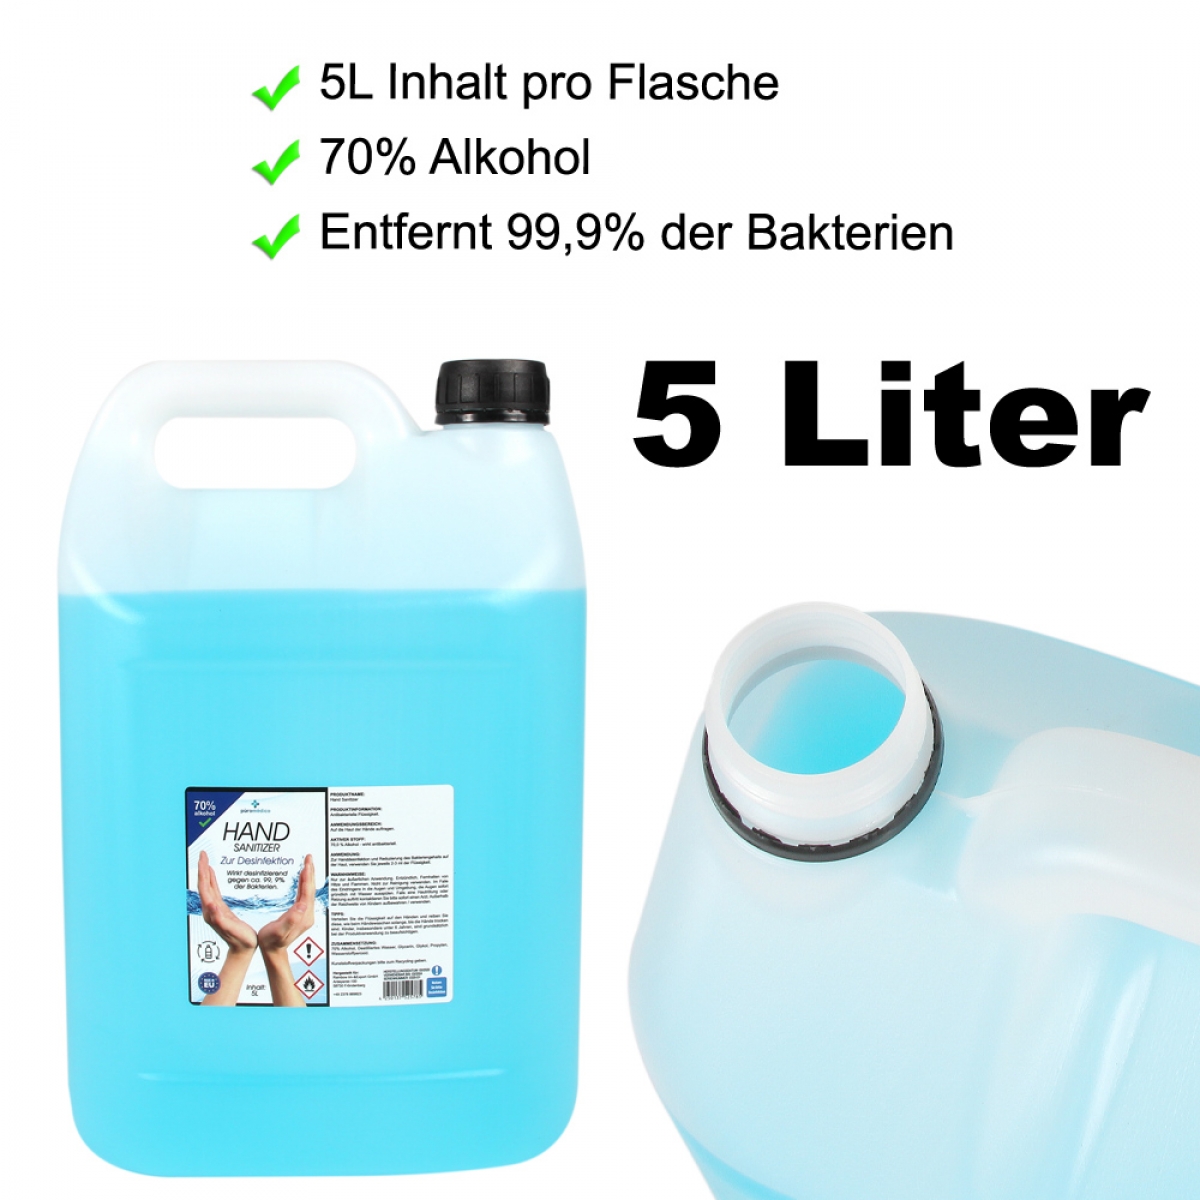 HAND-SANITIZER-Hygiene, Handdesinfektion - Hnde-Desinfektionsmittel, 5 Liter Kanister